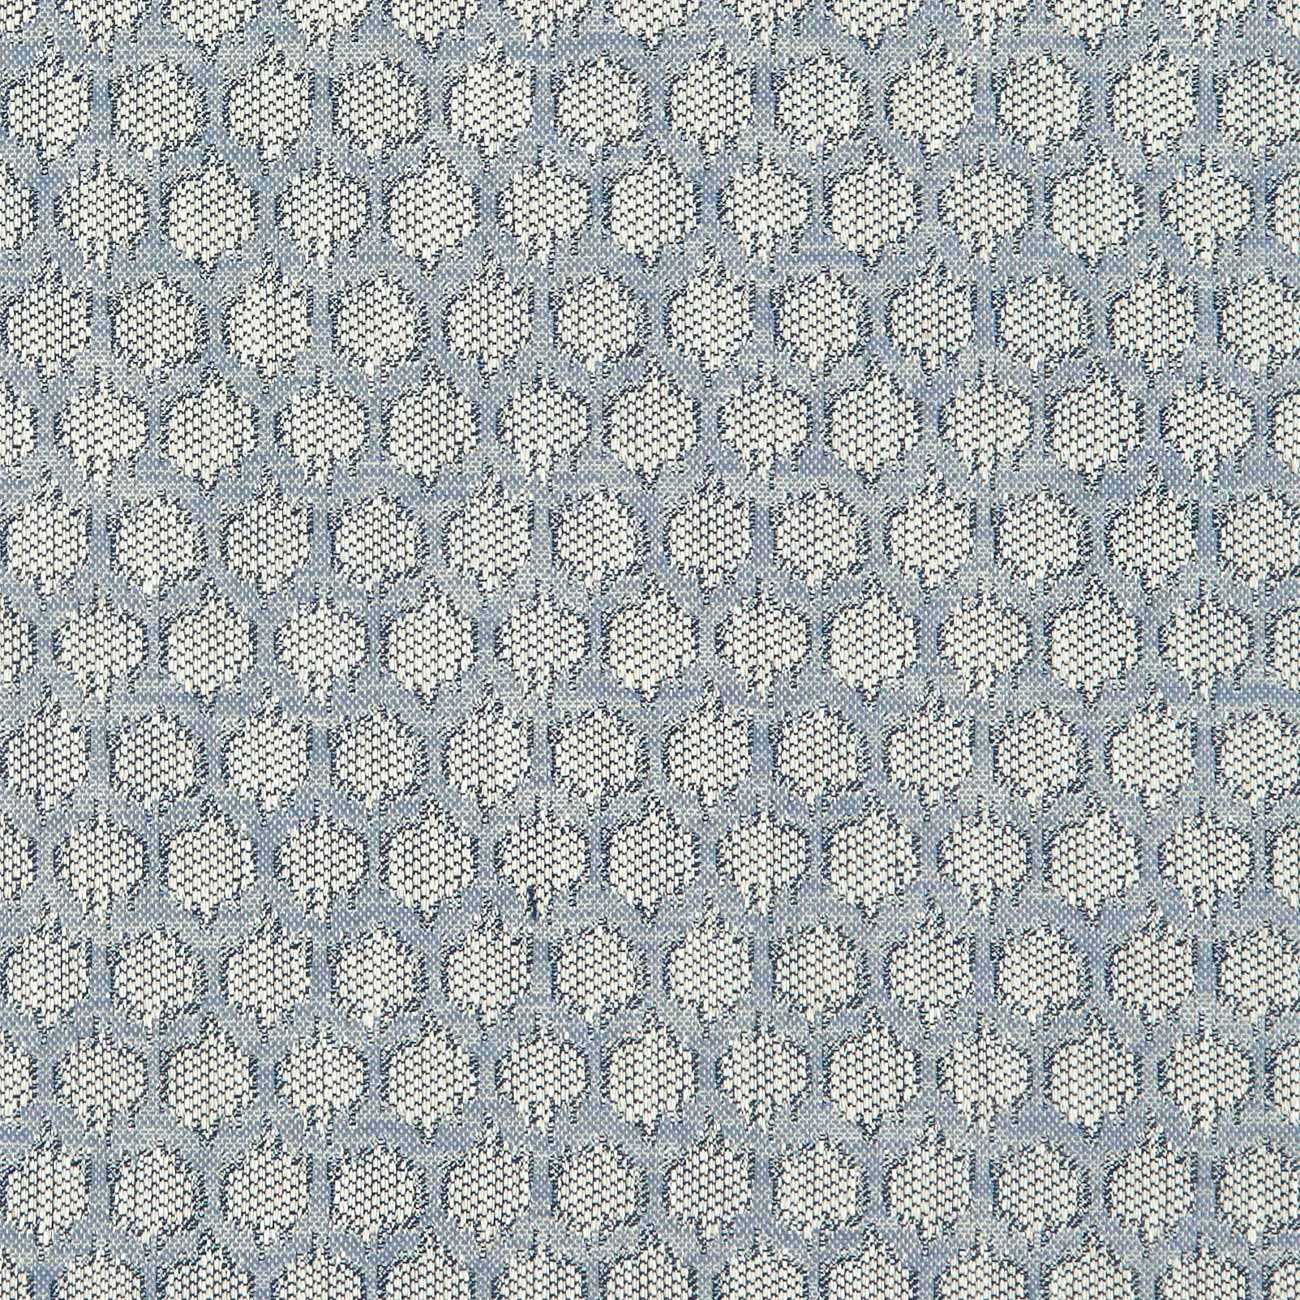 Dorset Denim Fabric by Clarke & Clarke